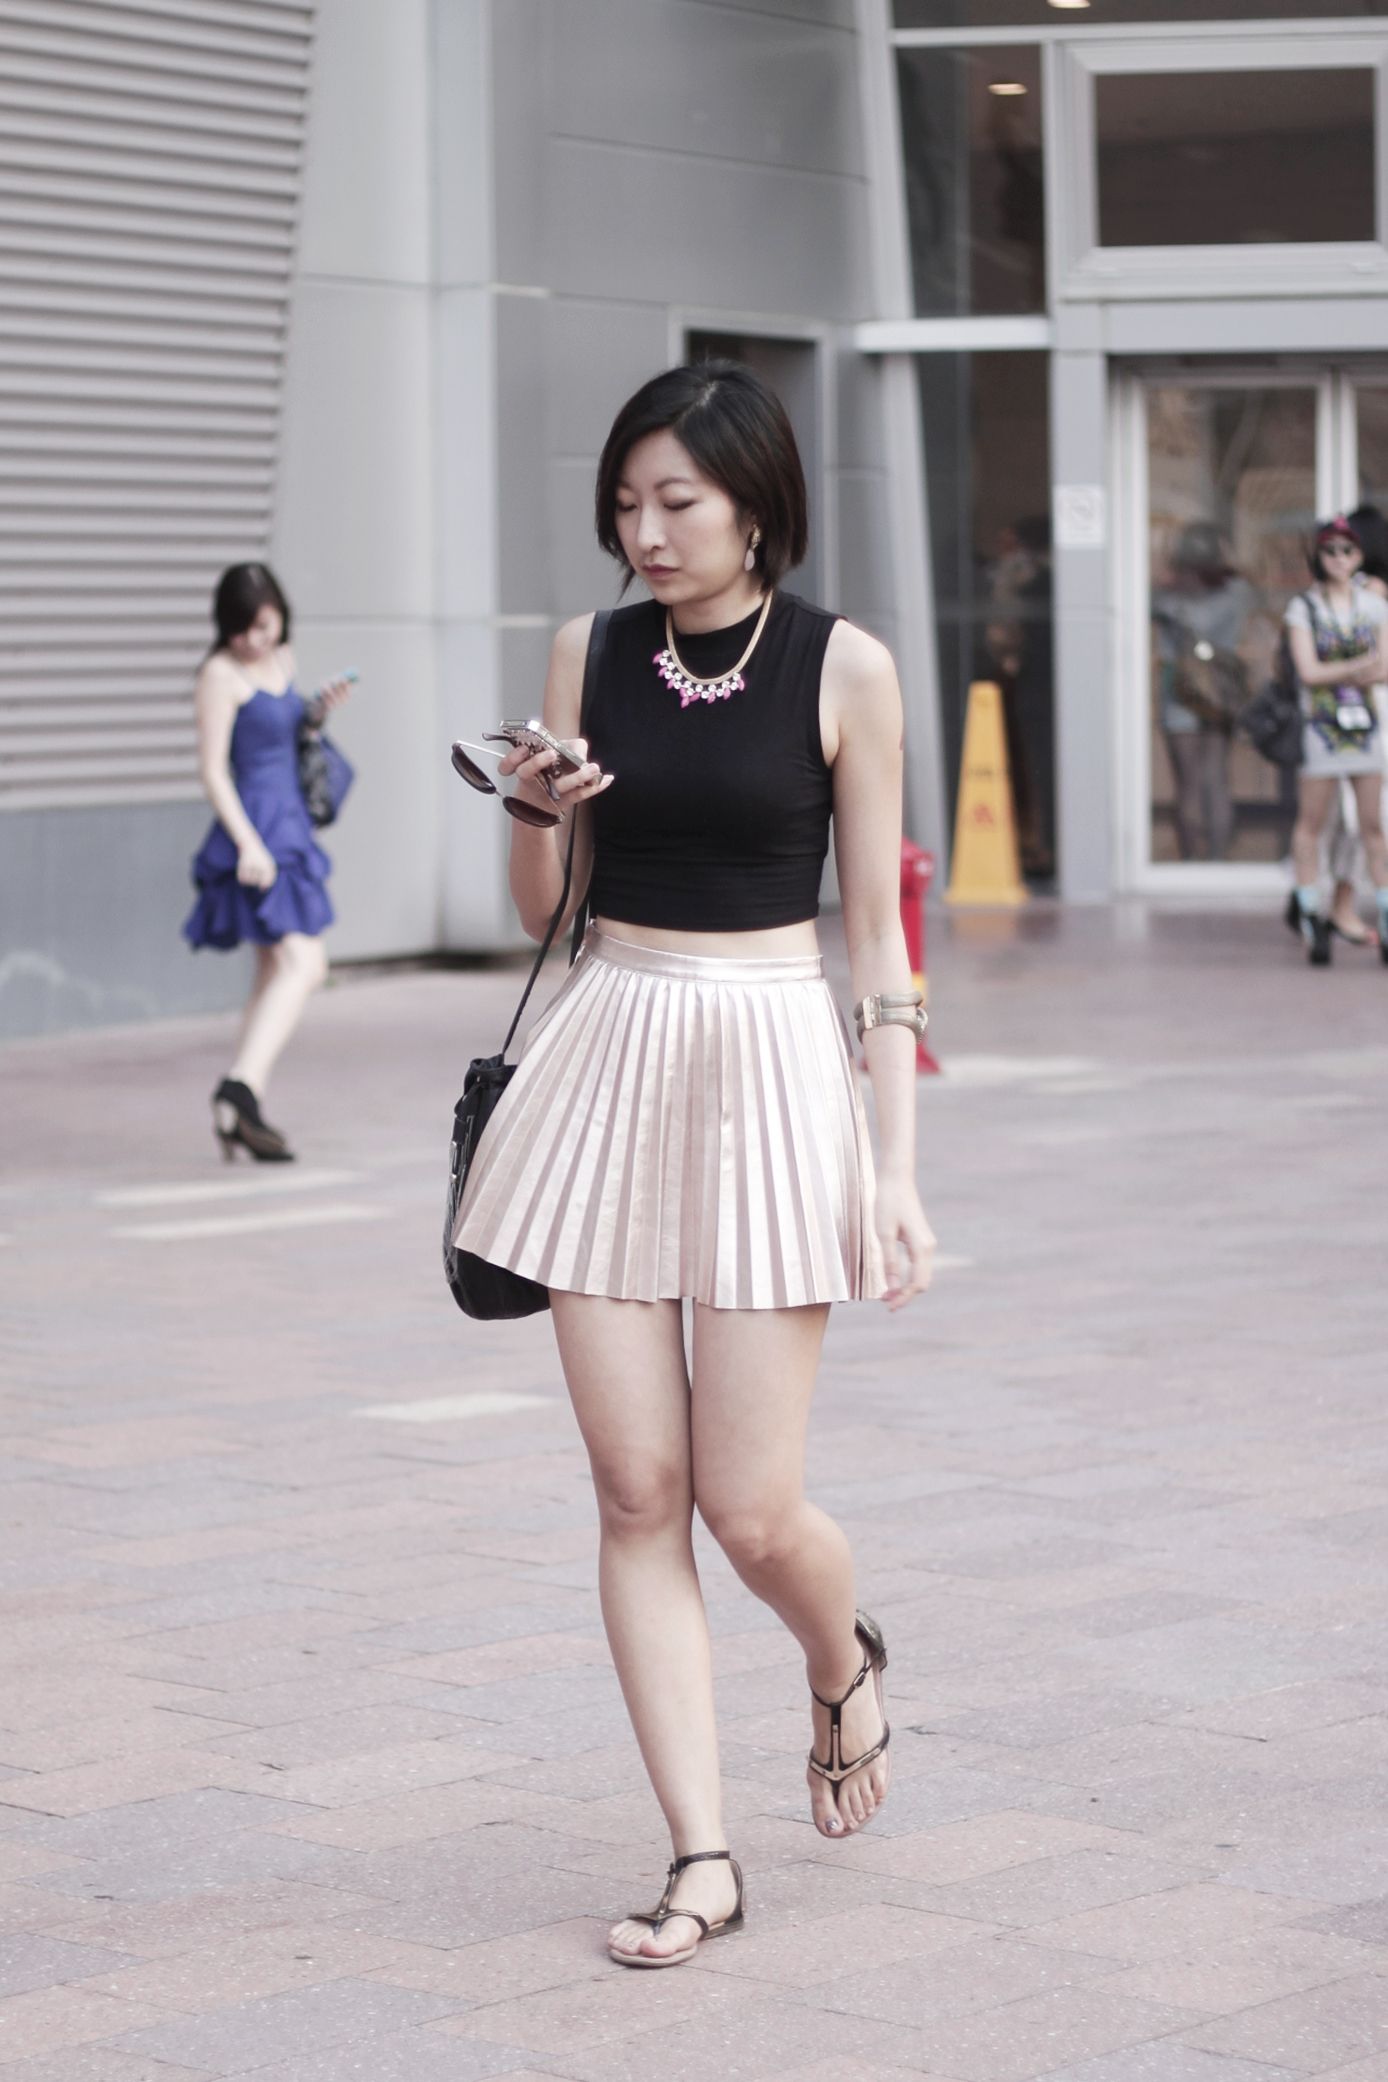 Asian girl sandal wearing